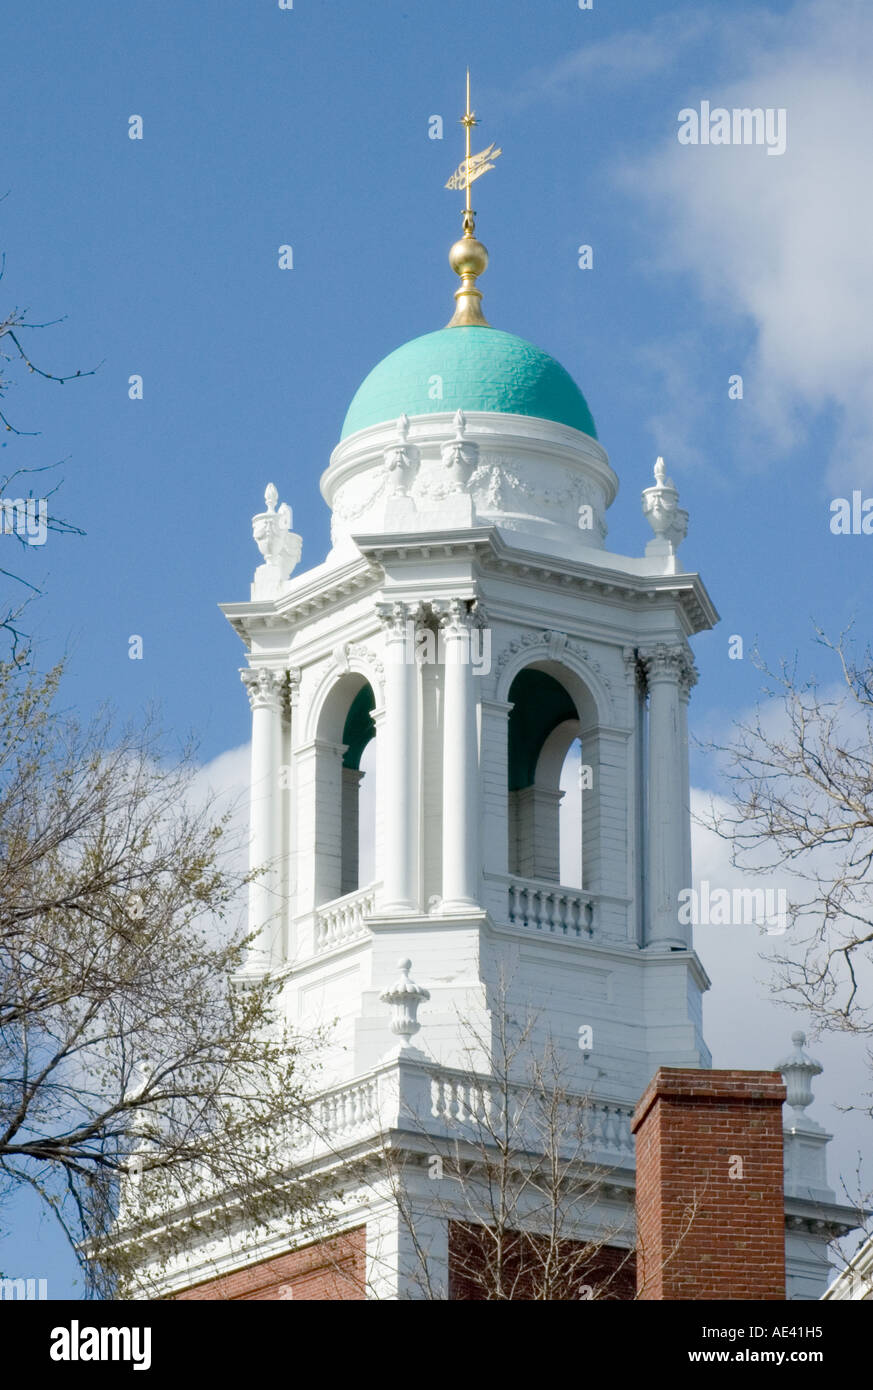 one of the many belltowers at Harvard University in Cambridge Massachusetts Stock Photo